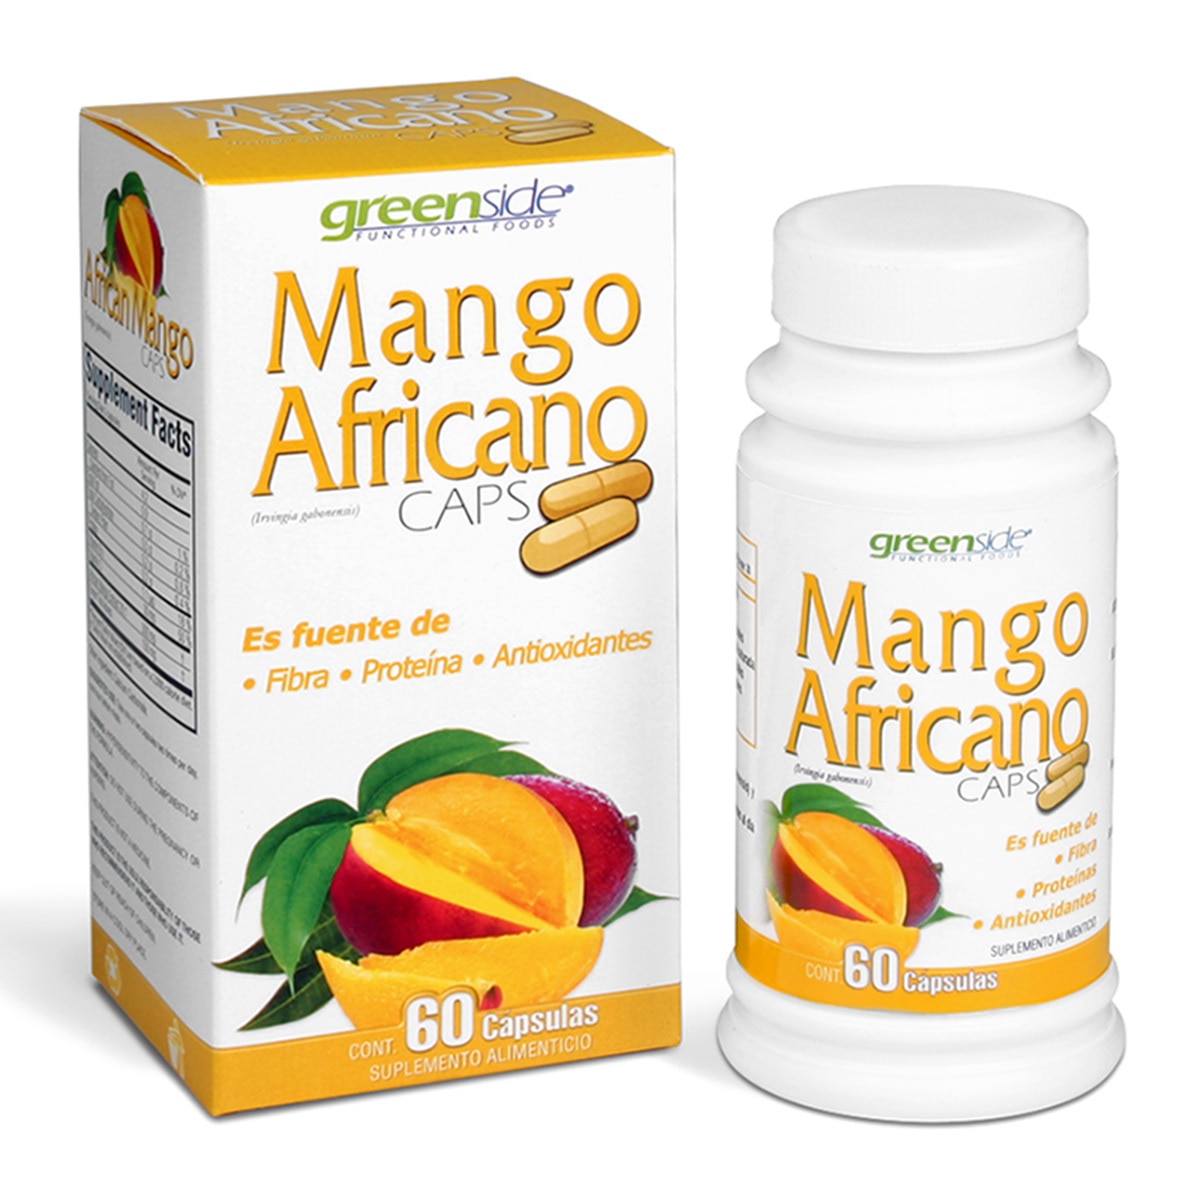 Greenside mango africano 2 frascos de 60 cápsulas cada uno